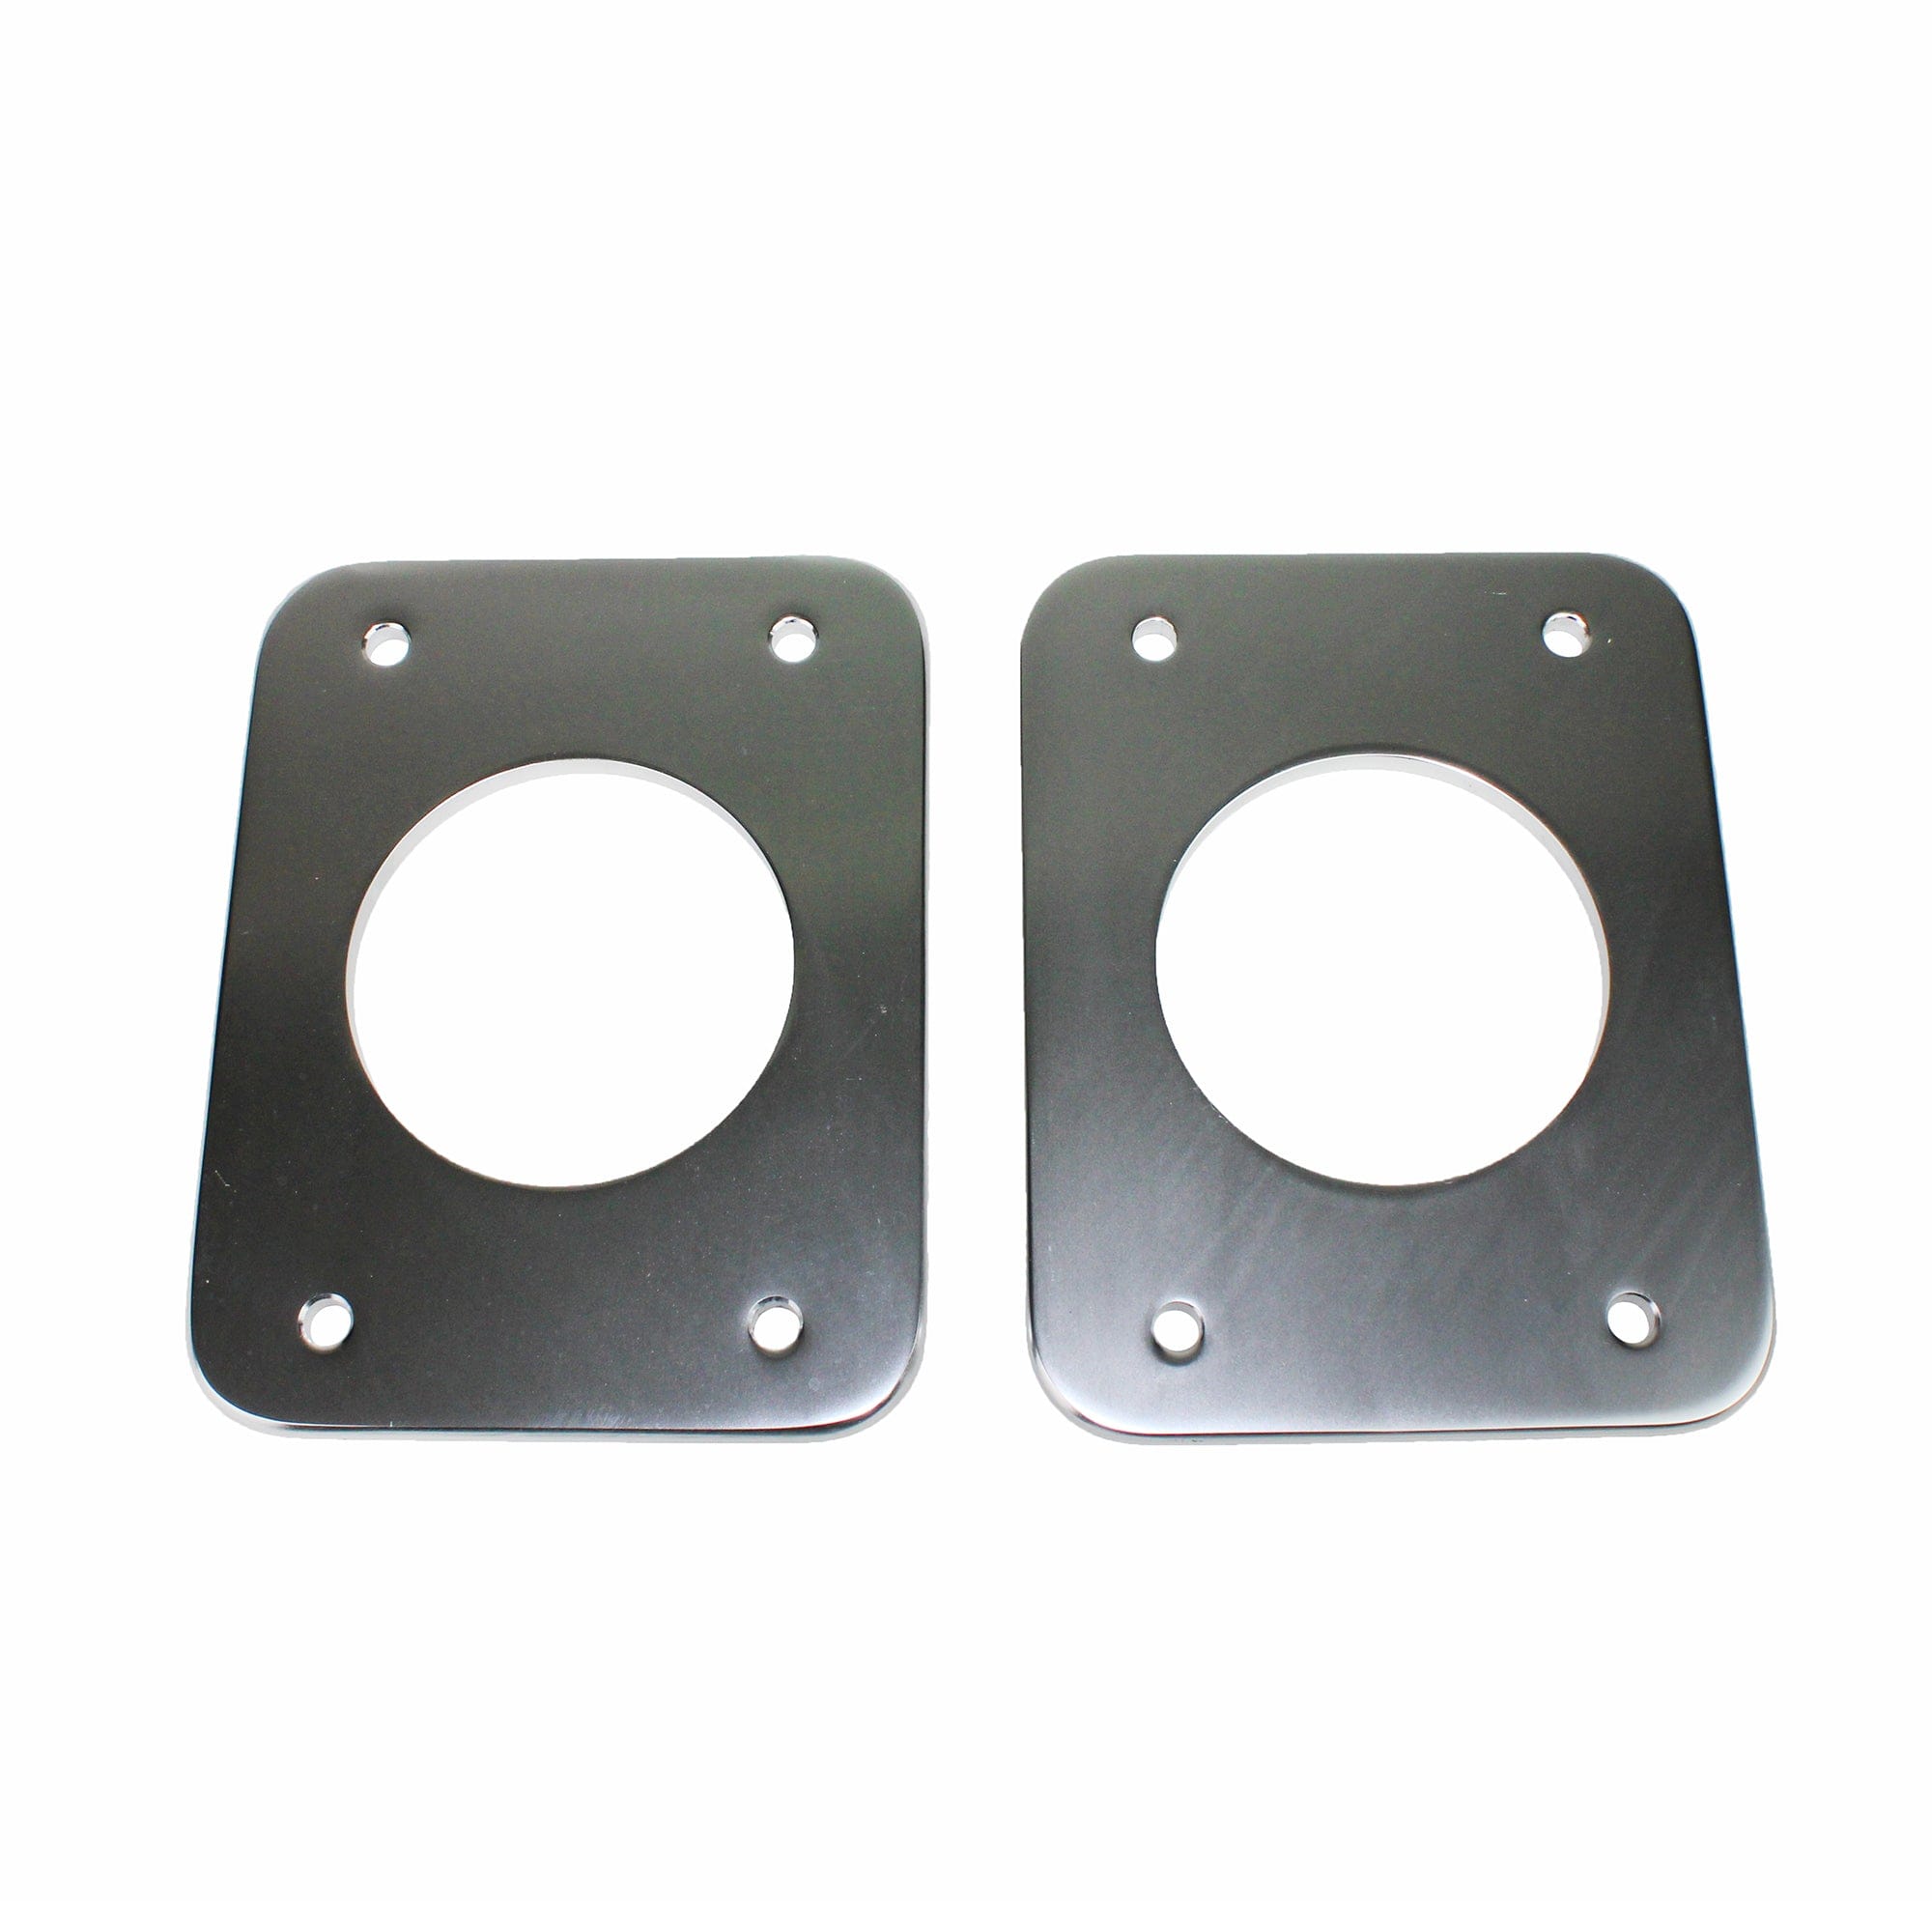 Tigress 88932 T-Top Aluminum Backing Plates 5” x 6-1/2” x 1/4”